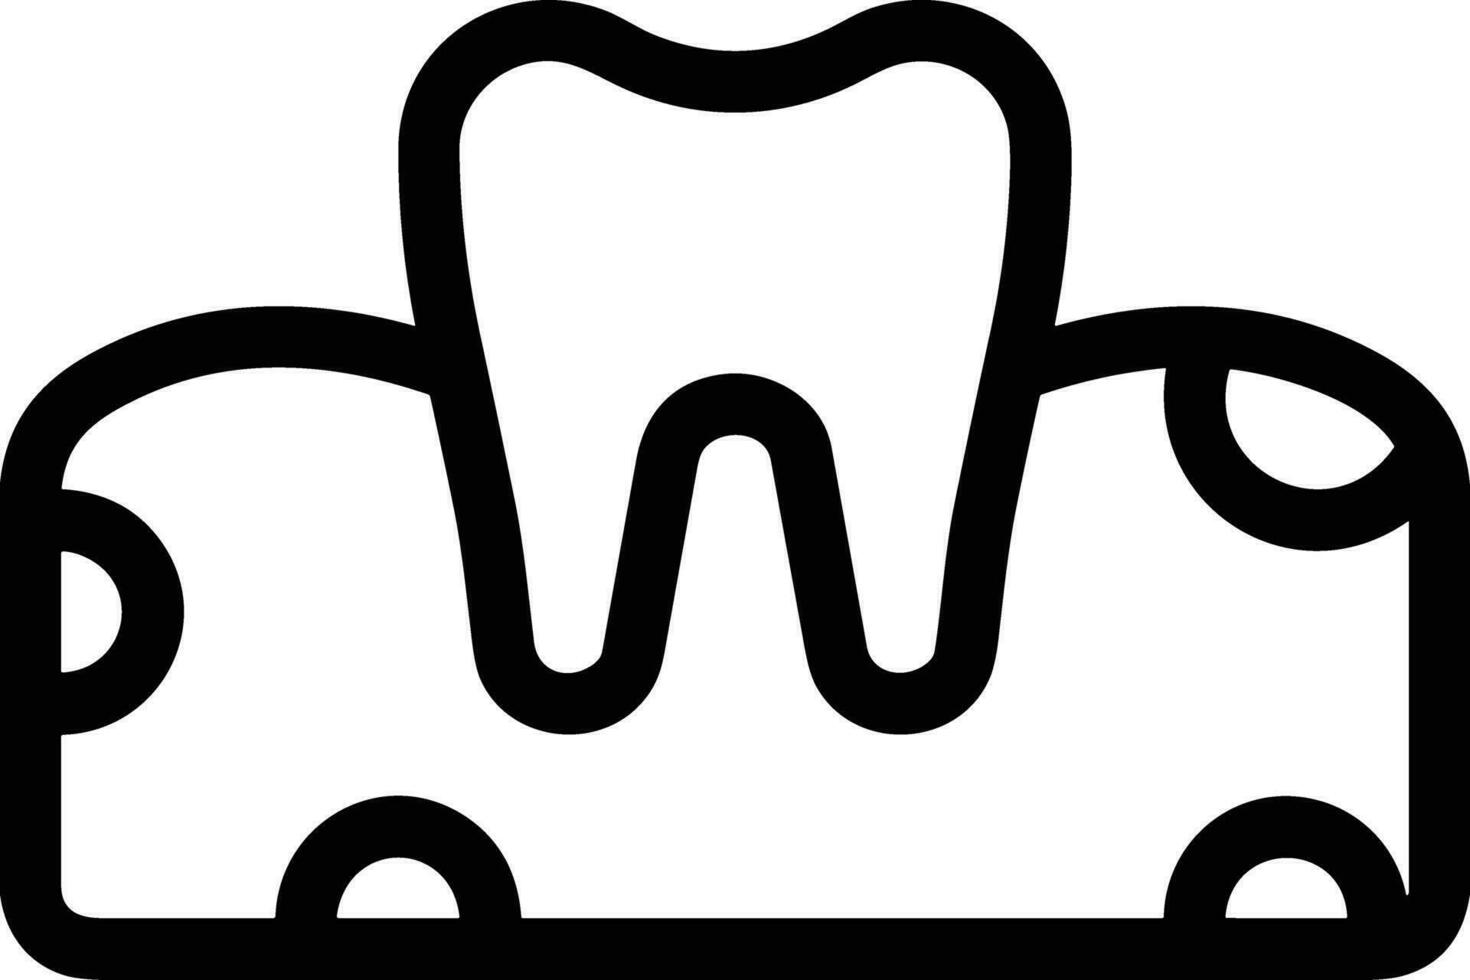 Tooth dentist icon symbol image vector. Illustration of the dental medicine symbol design graphic image vector